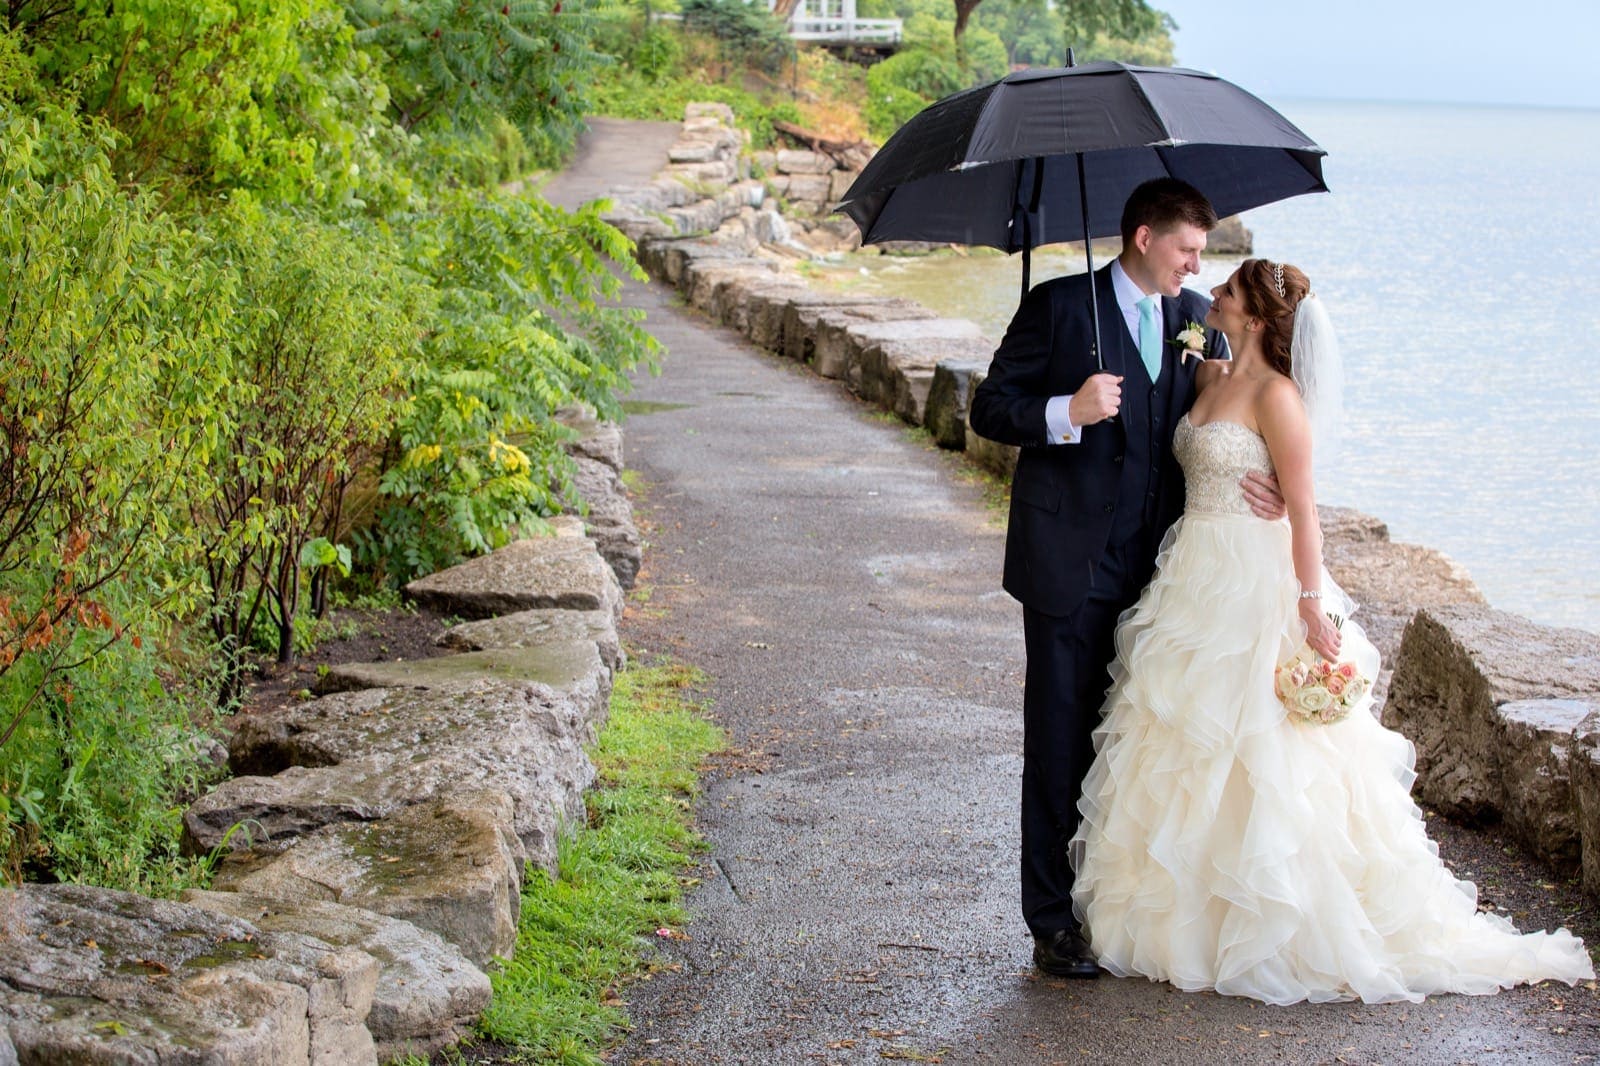 Oakville wedding photography on a rainy day